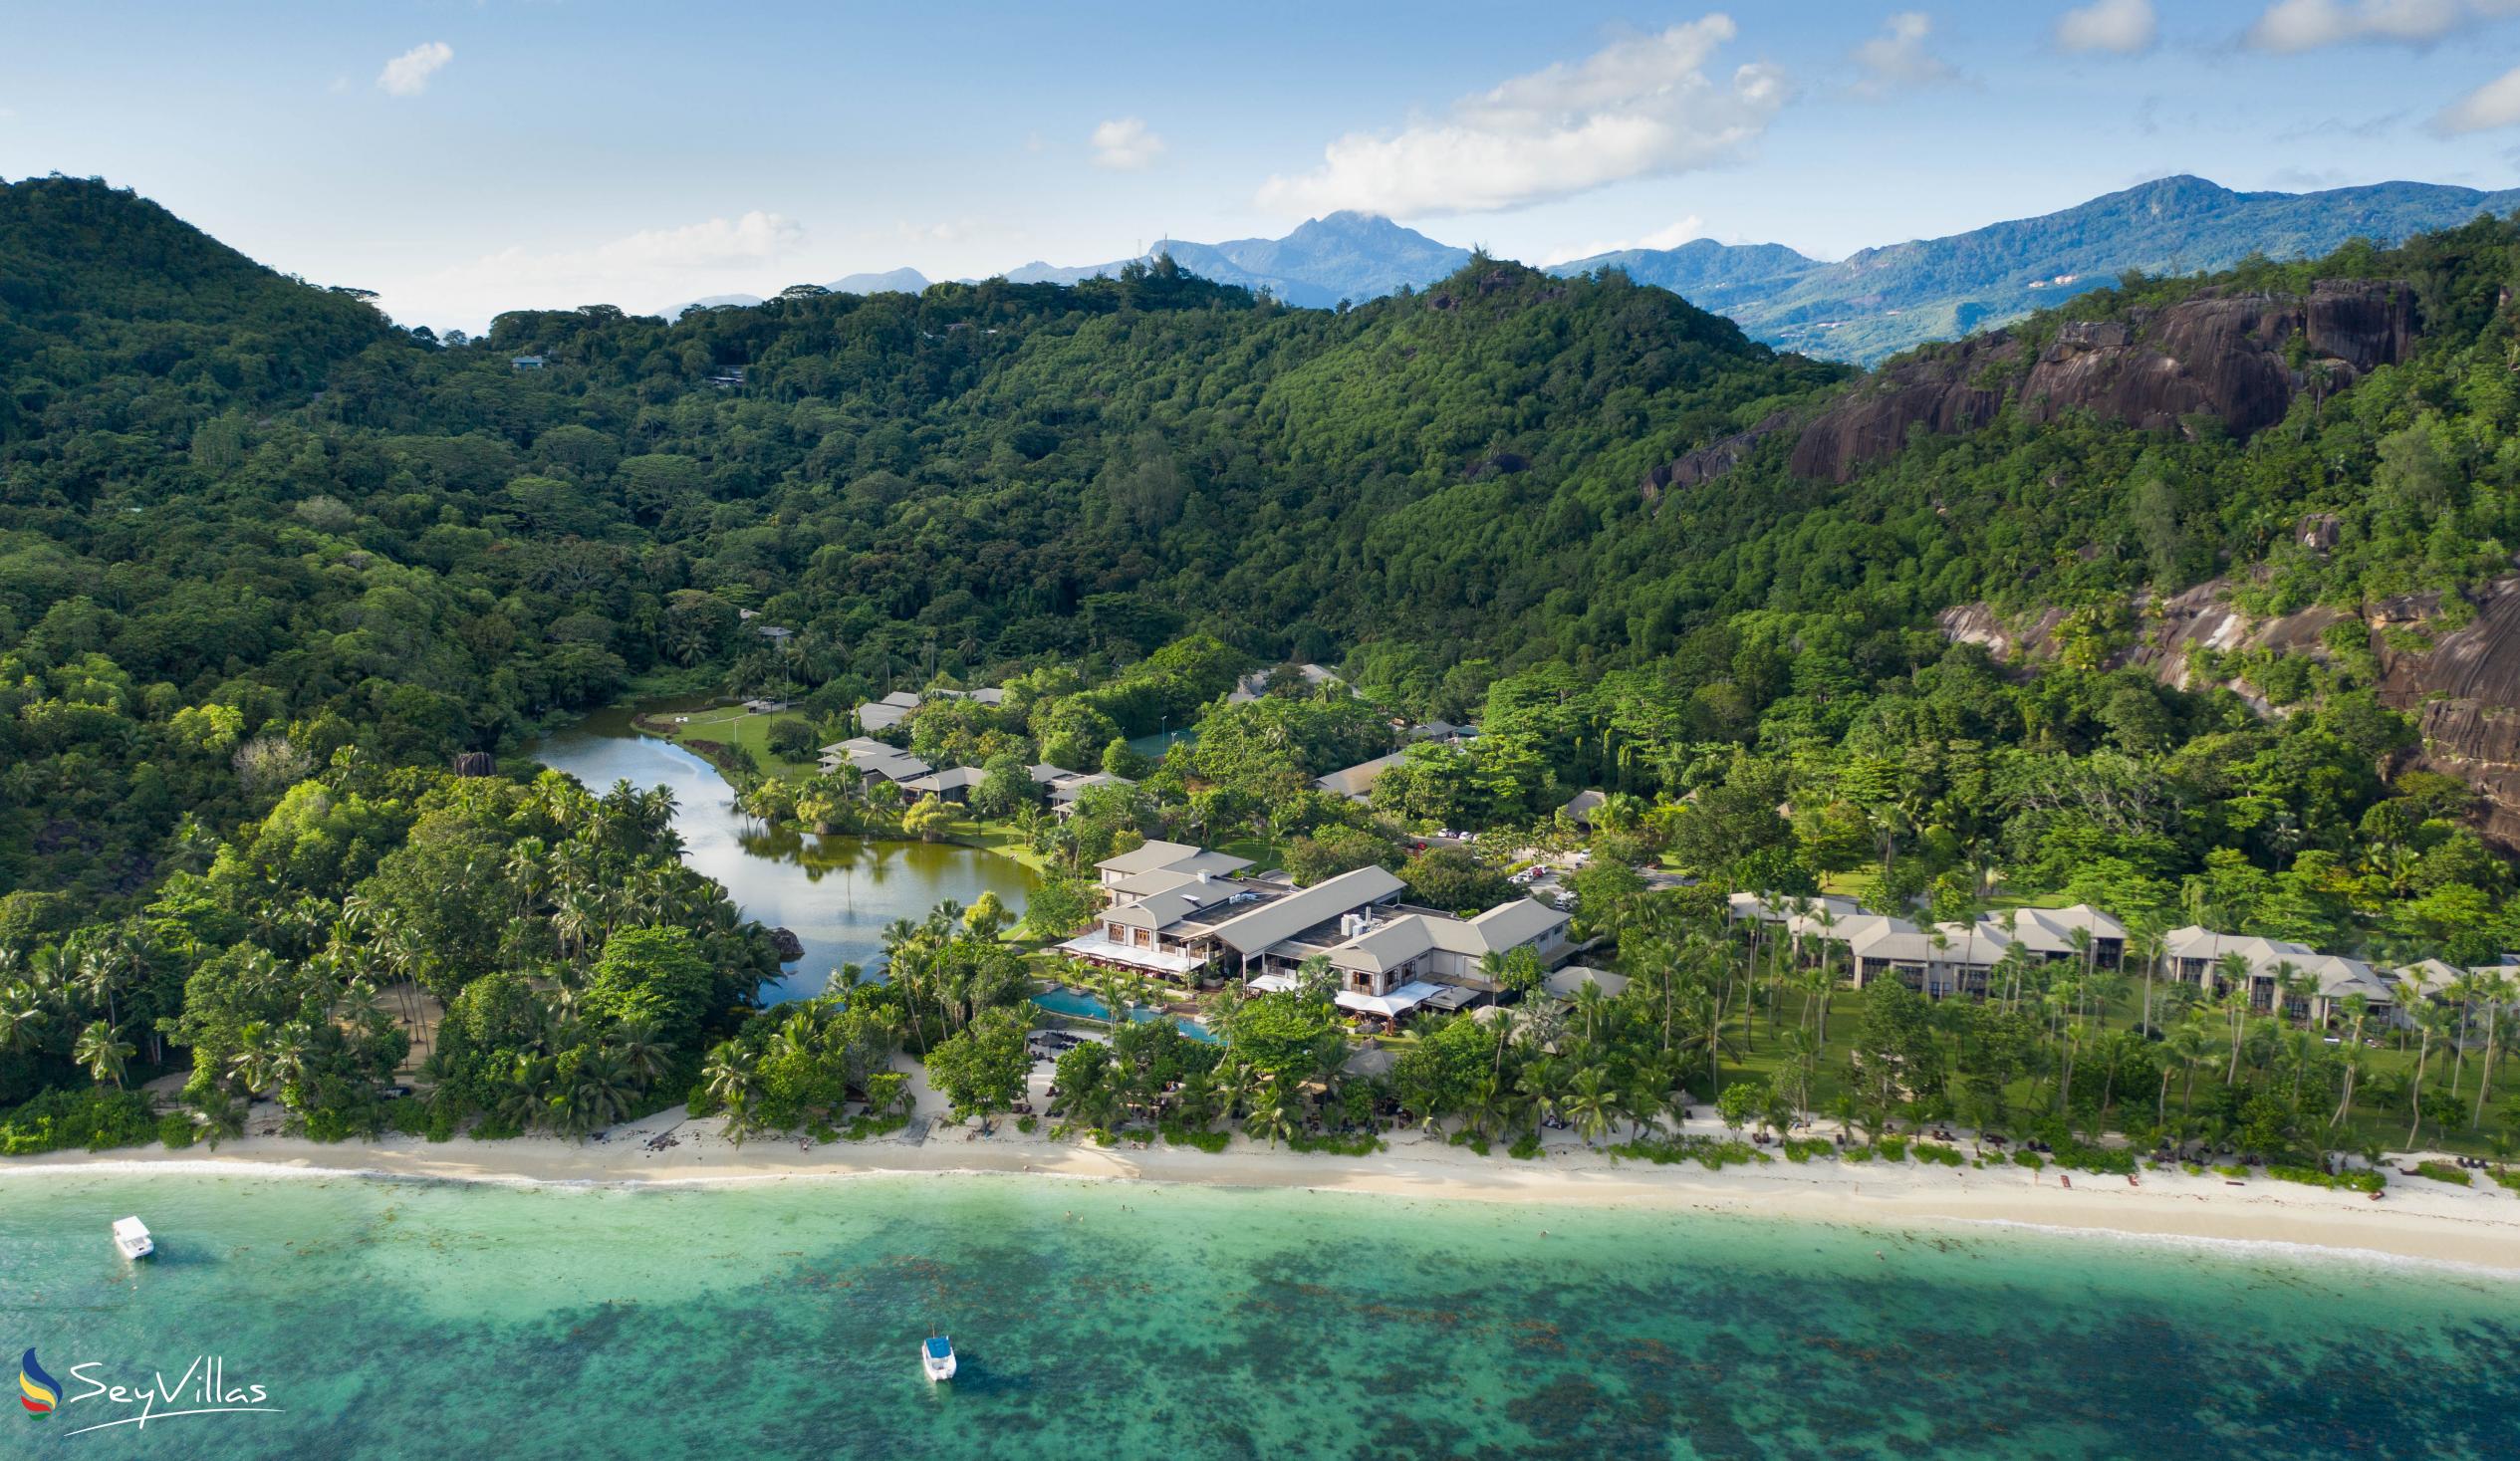 Foto 4: Kempinski Seychelles Resort Baie Lazare - Aussenbereich - Mahé (Seychellen)